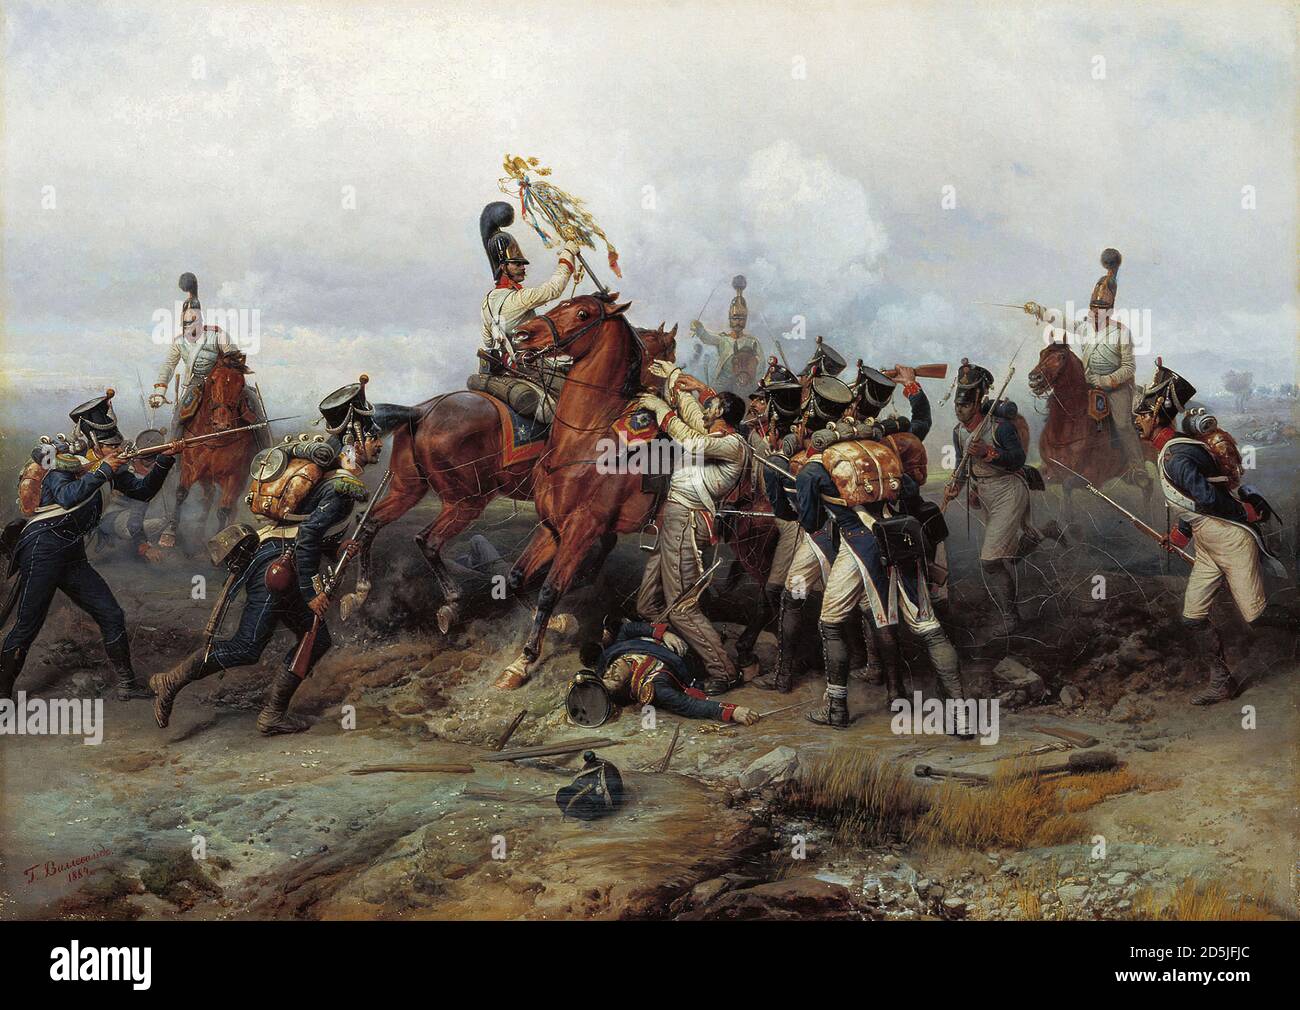 Villevalde Bogdan Pavlovich - Exploit of the Horse Regiment in the Battle of Austerlitz 1805 - Russian School - 19th  Century Stock Photo